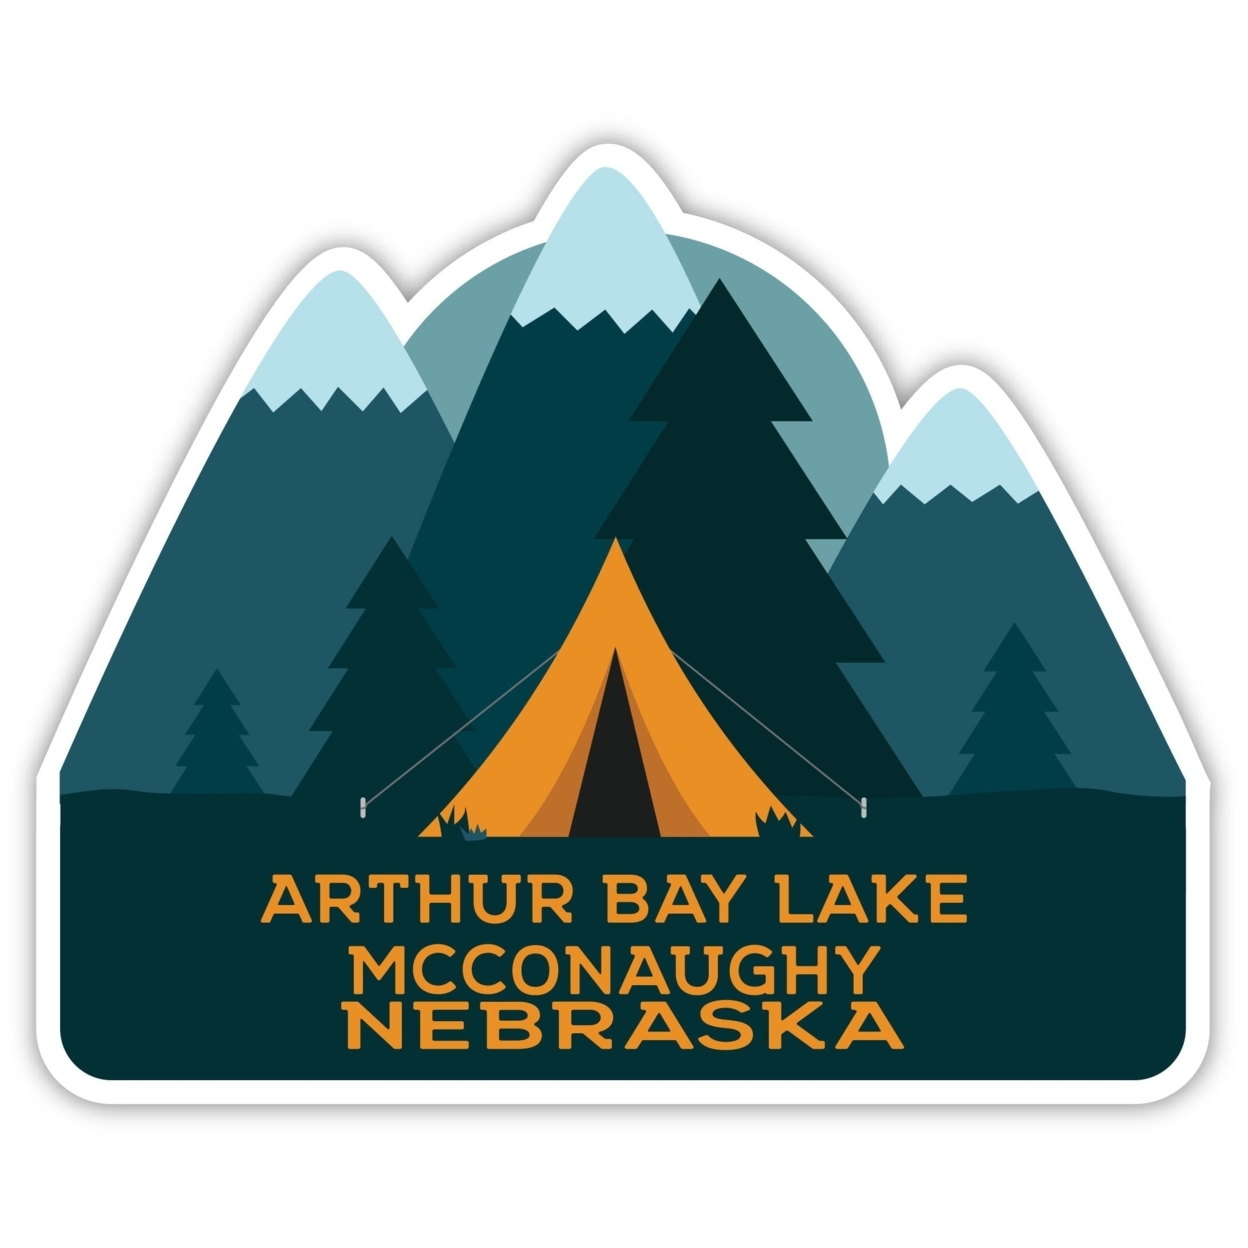 Arthur Bay Lake Mcconaughy Nebraska Souvenir Decorative Stickers (Choose Theme And Size) - Single Unit, 10-Inch, Tent